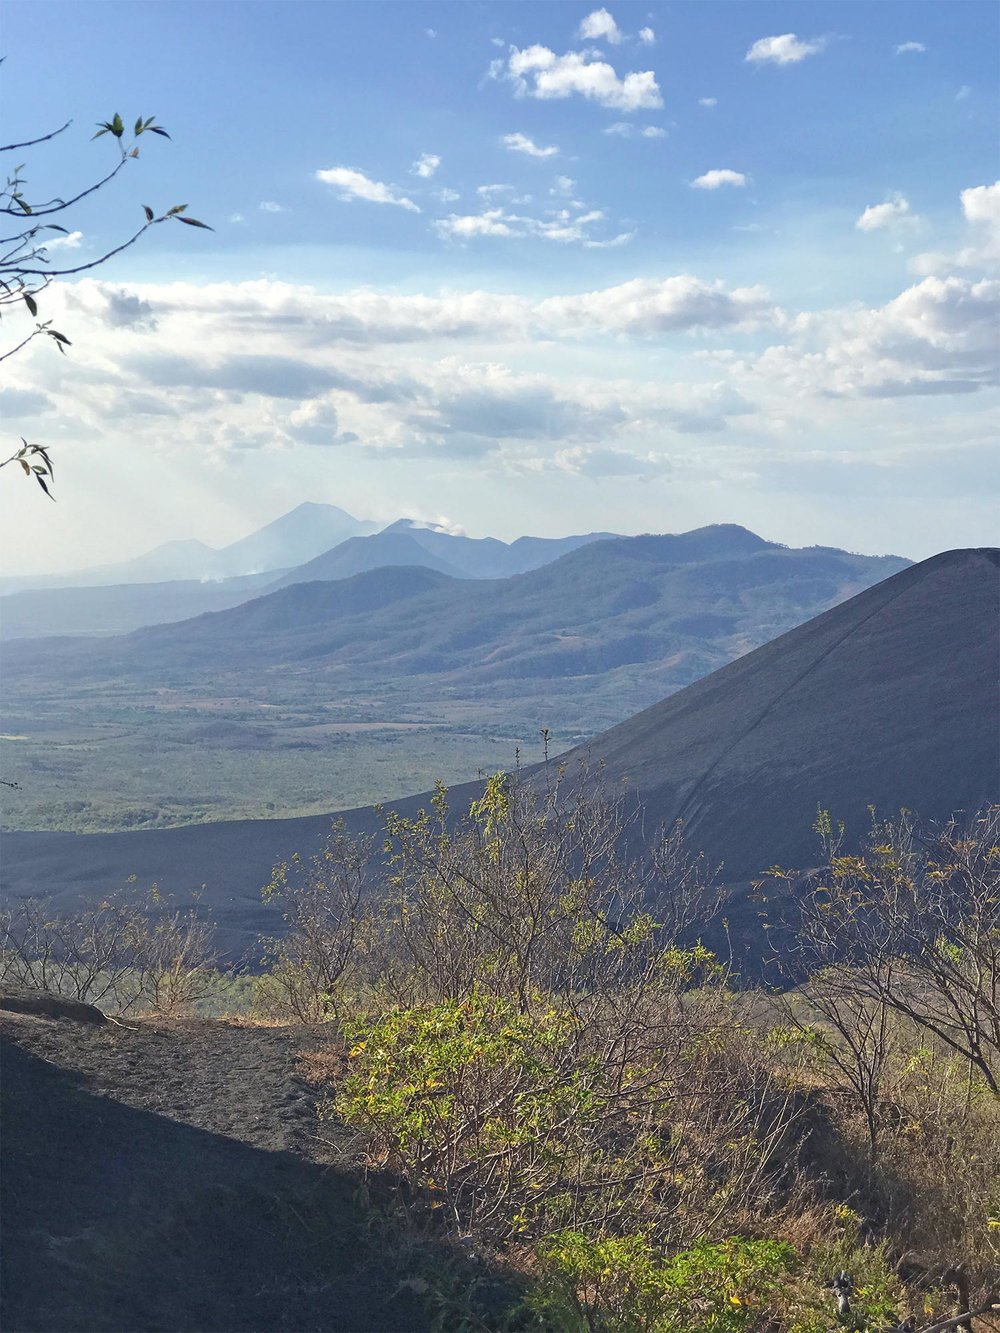 Hiking El Hoyo volcano in Nicaragua